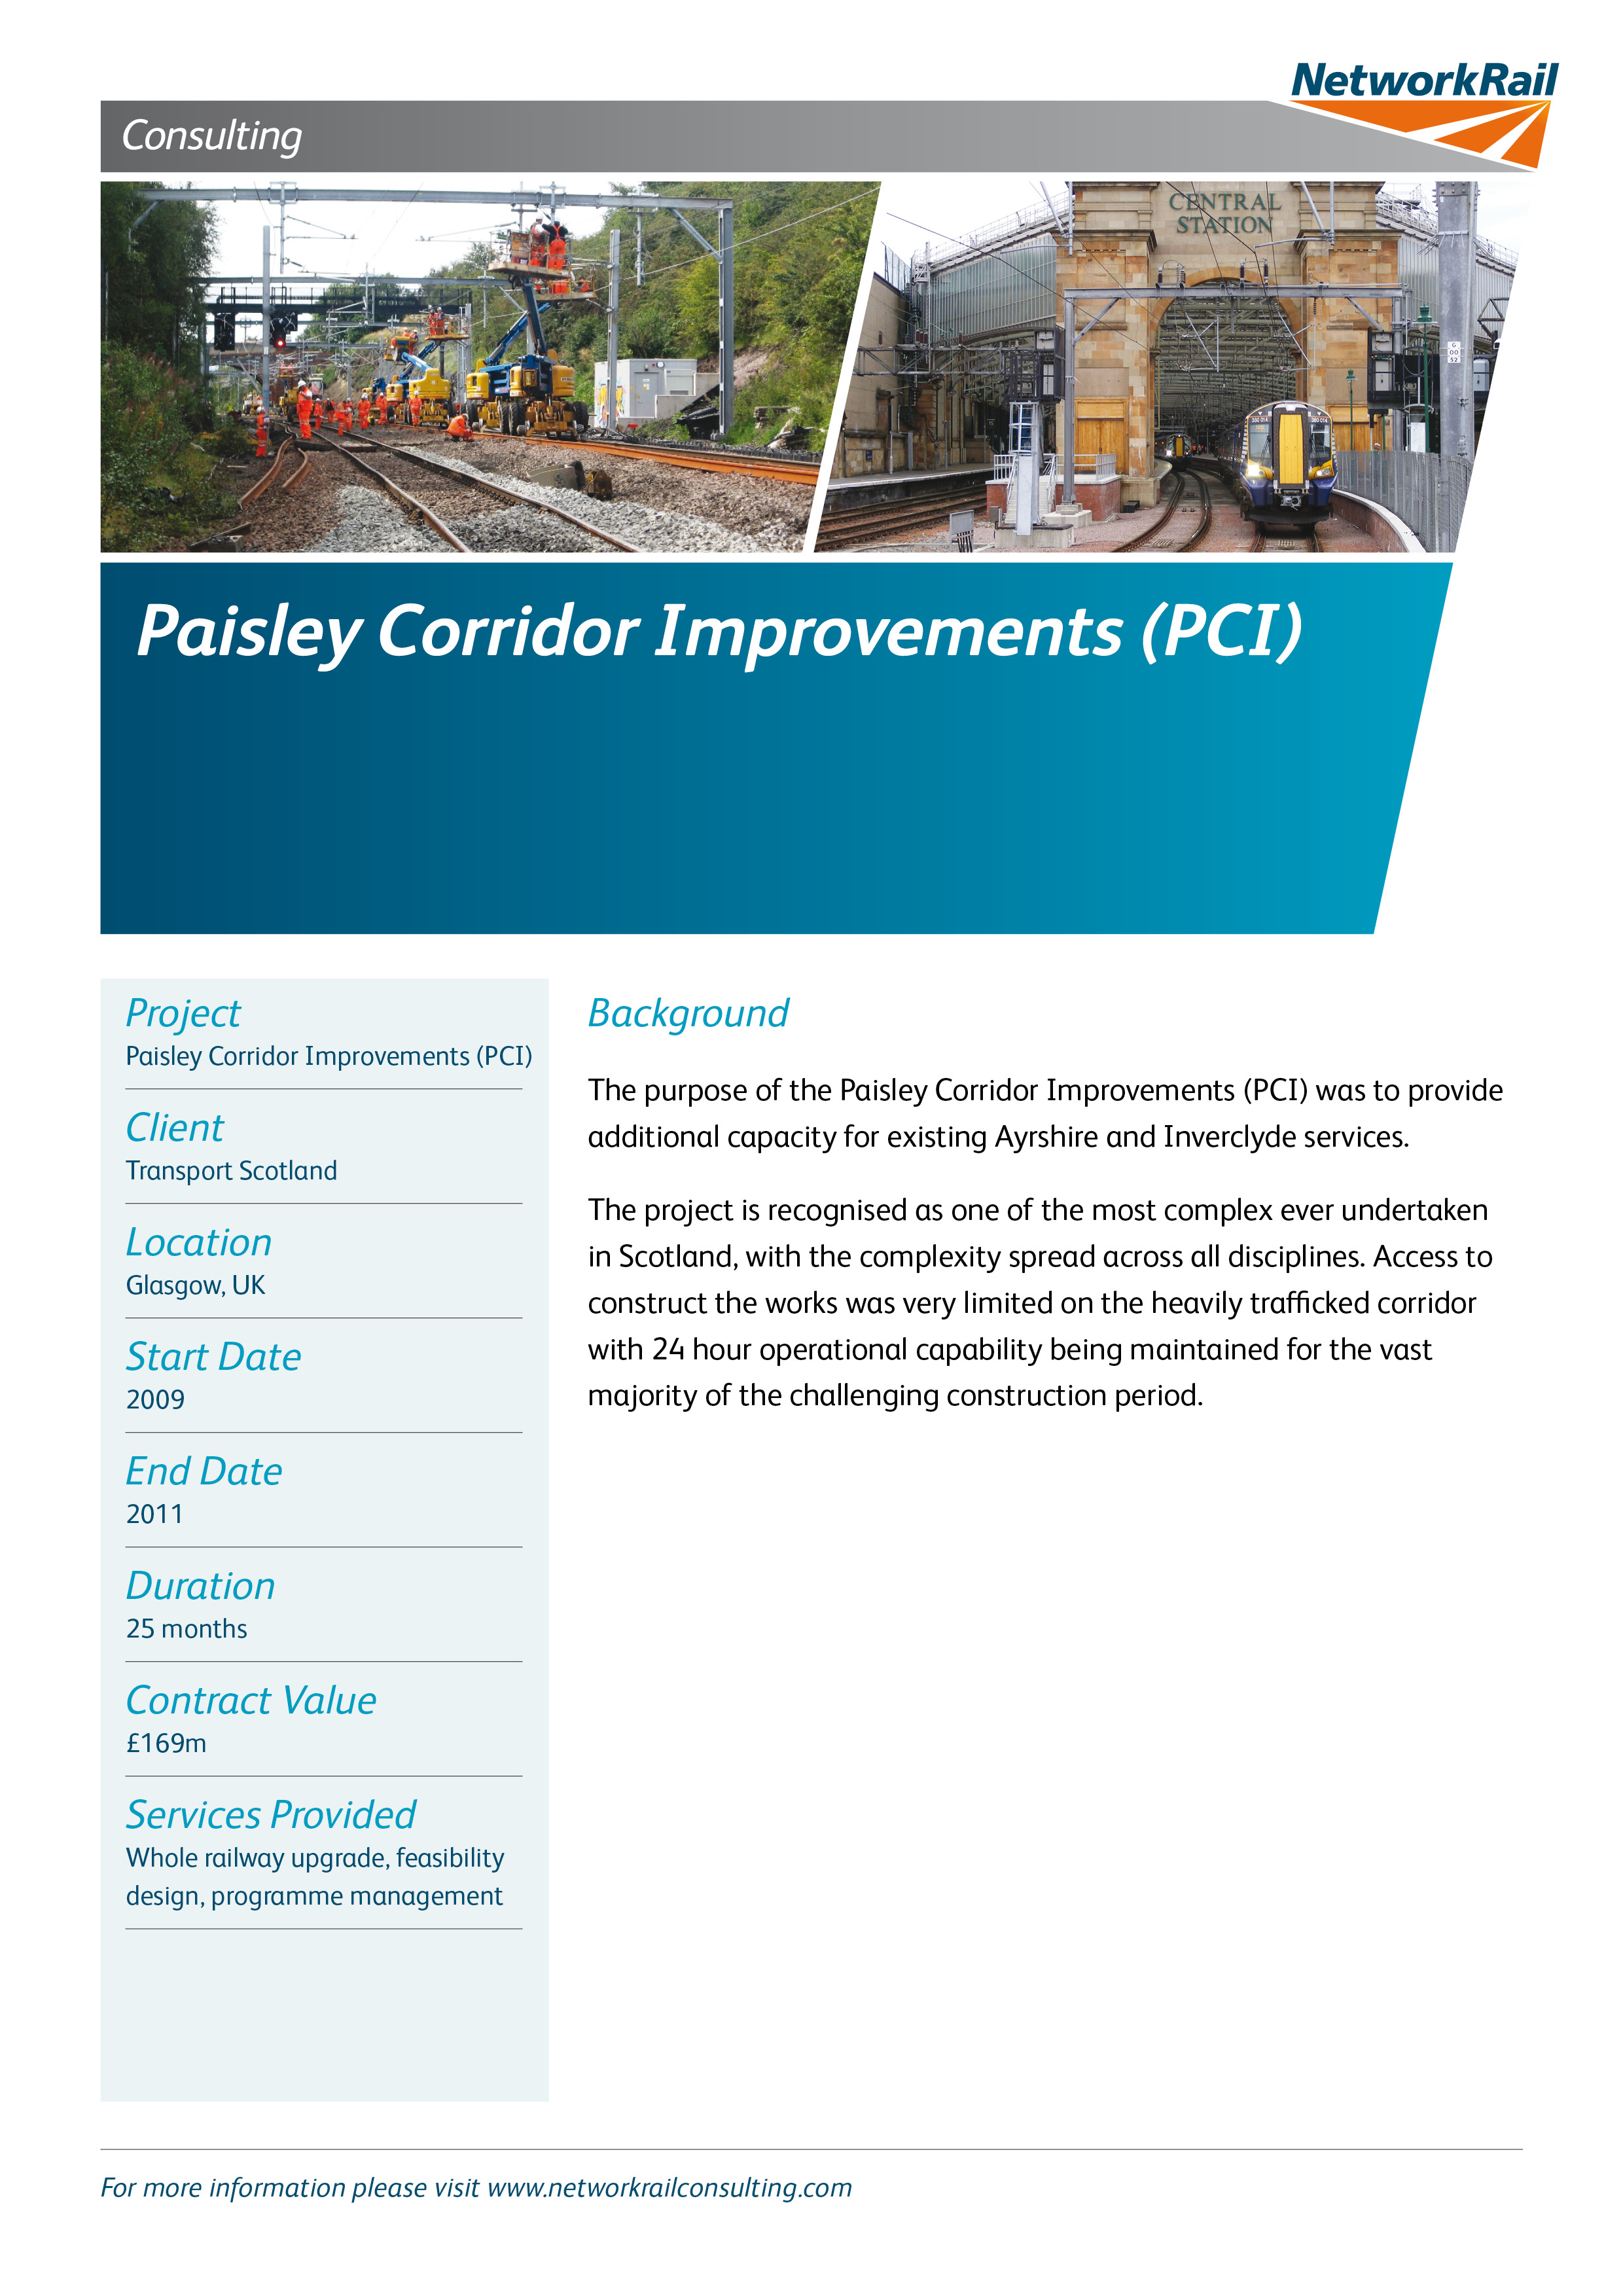 Paisley Corridor Improvements PCI